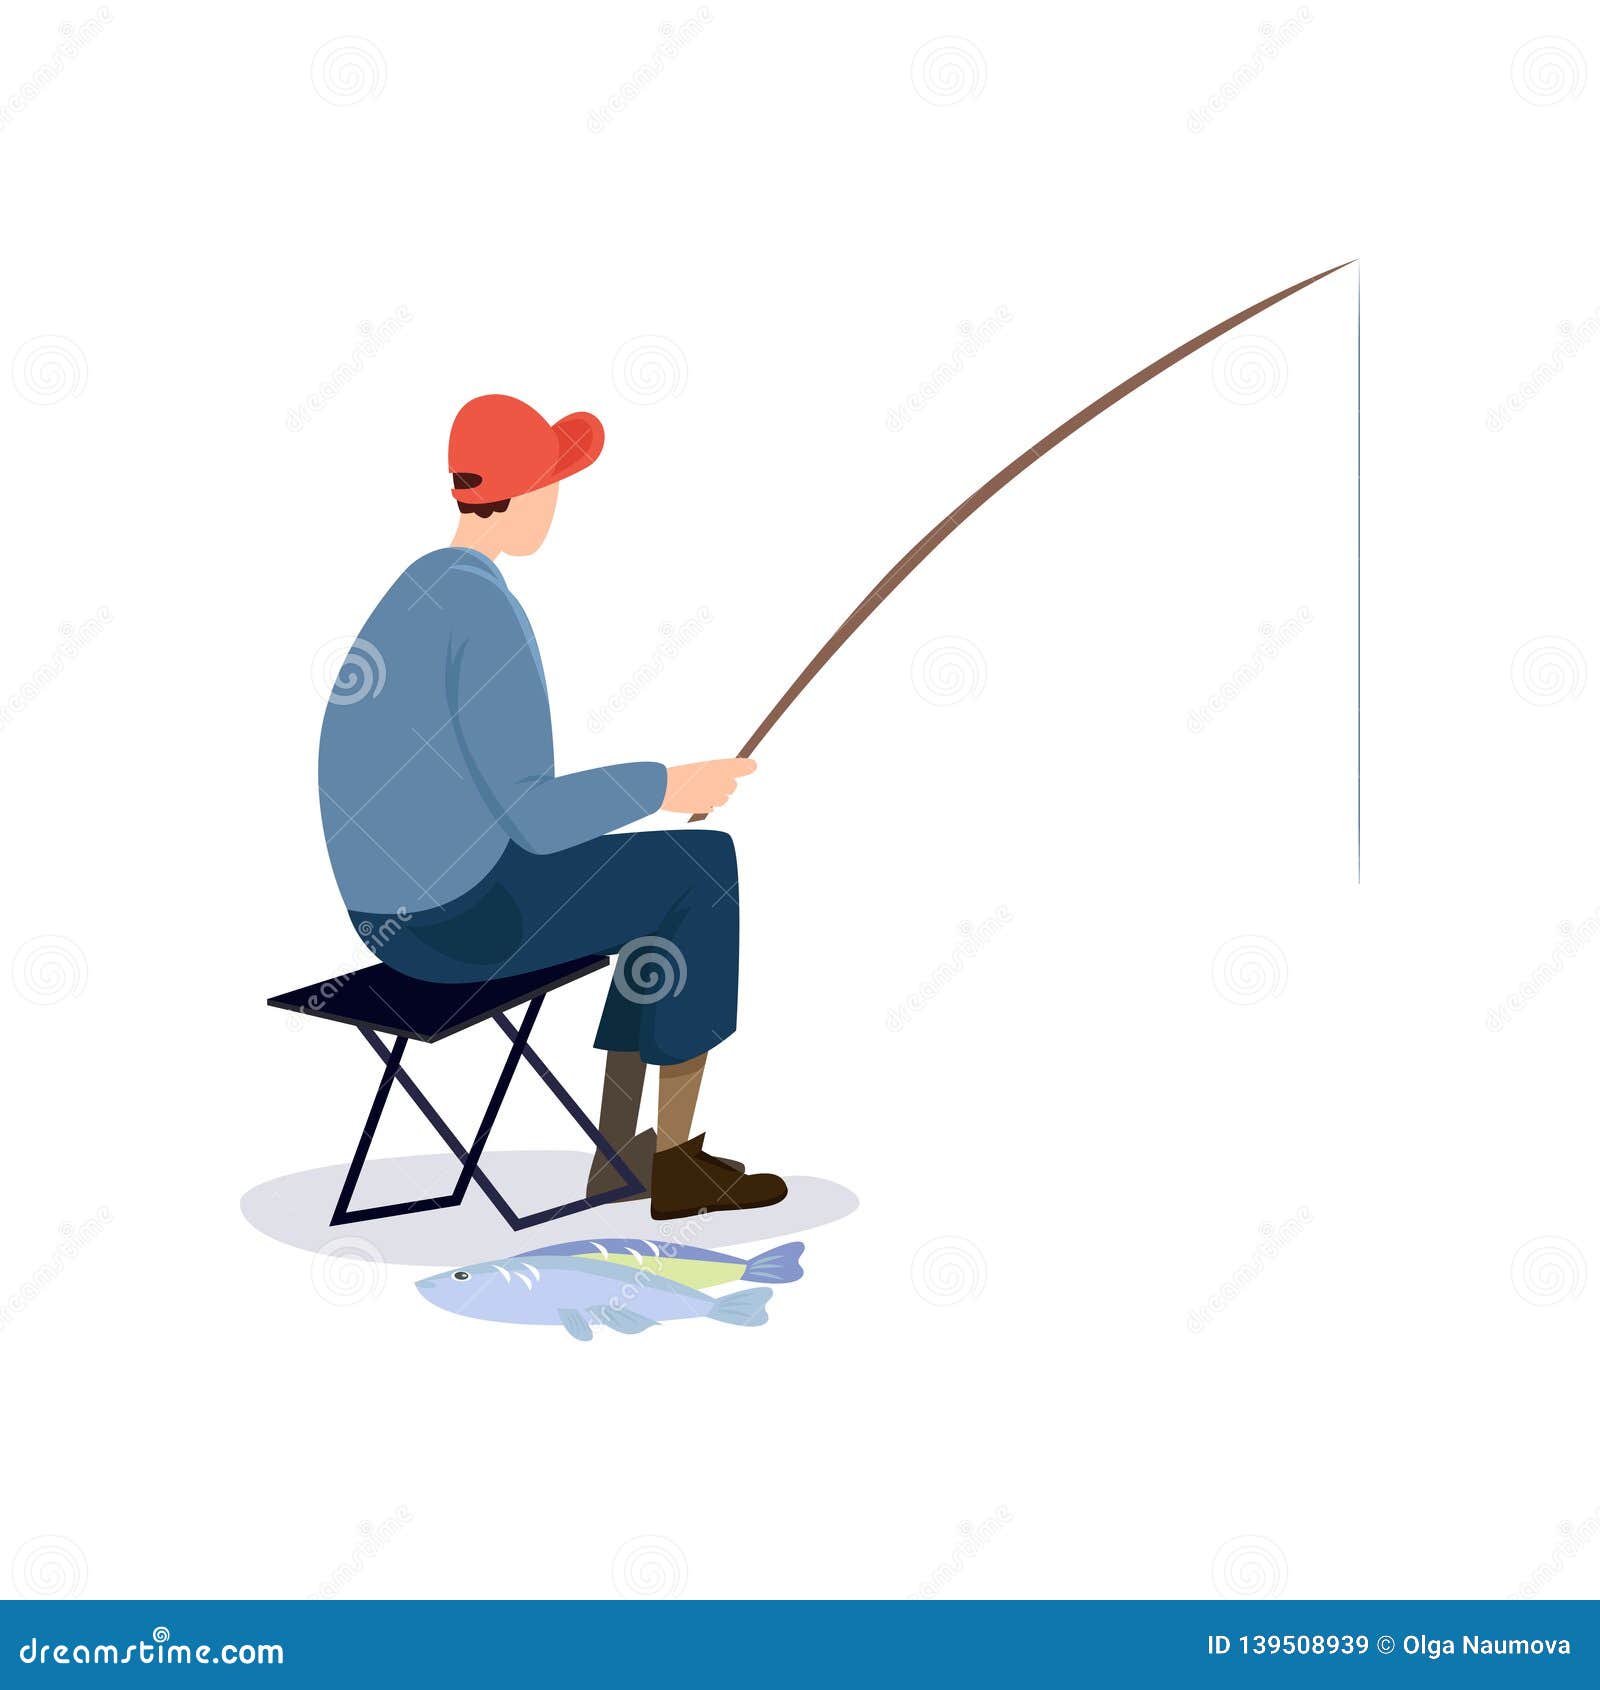 https://thumbs.dreamstime.com/z/fisherman-sitting-folding-chair-male-fisher-character-fishing-rod-caught-fish-vector-illustration-fisherman-sitting-139508939.jpg